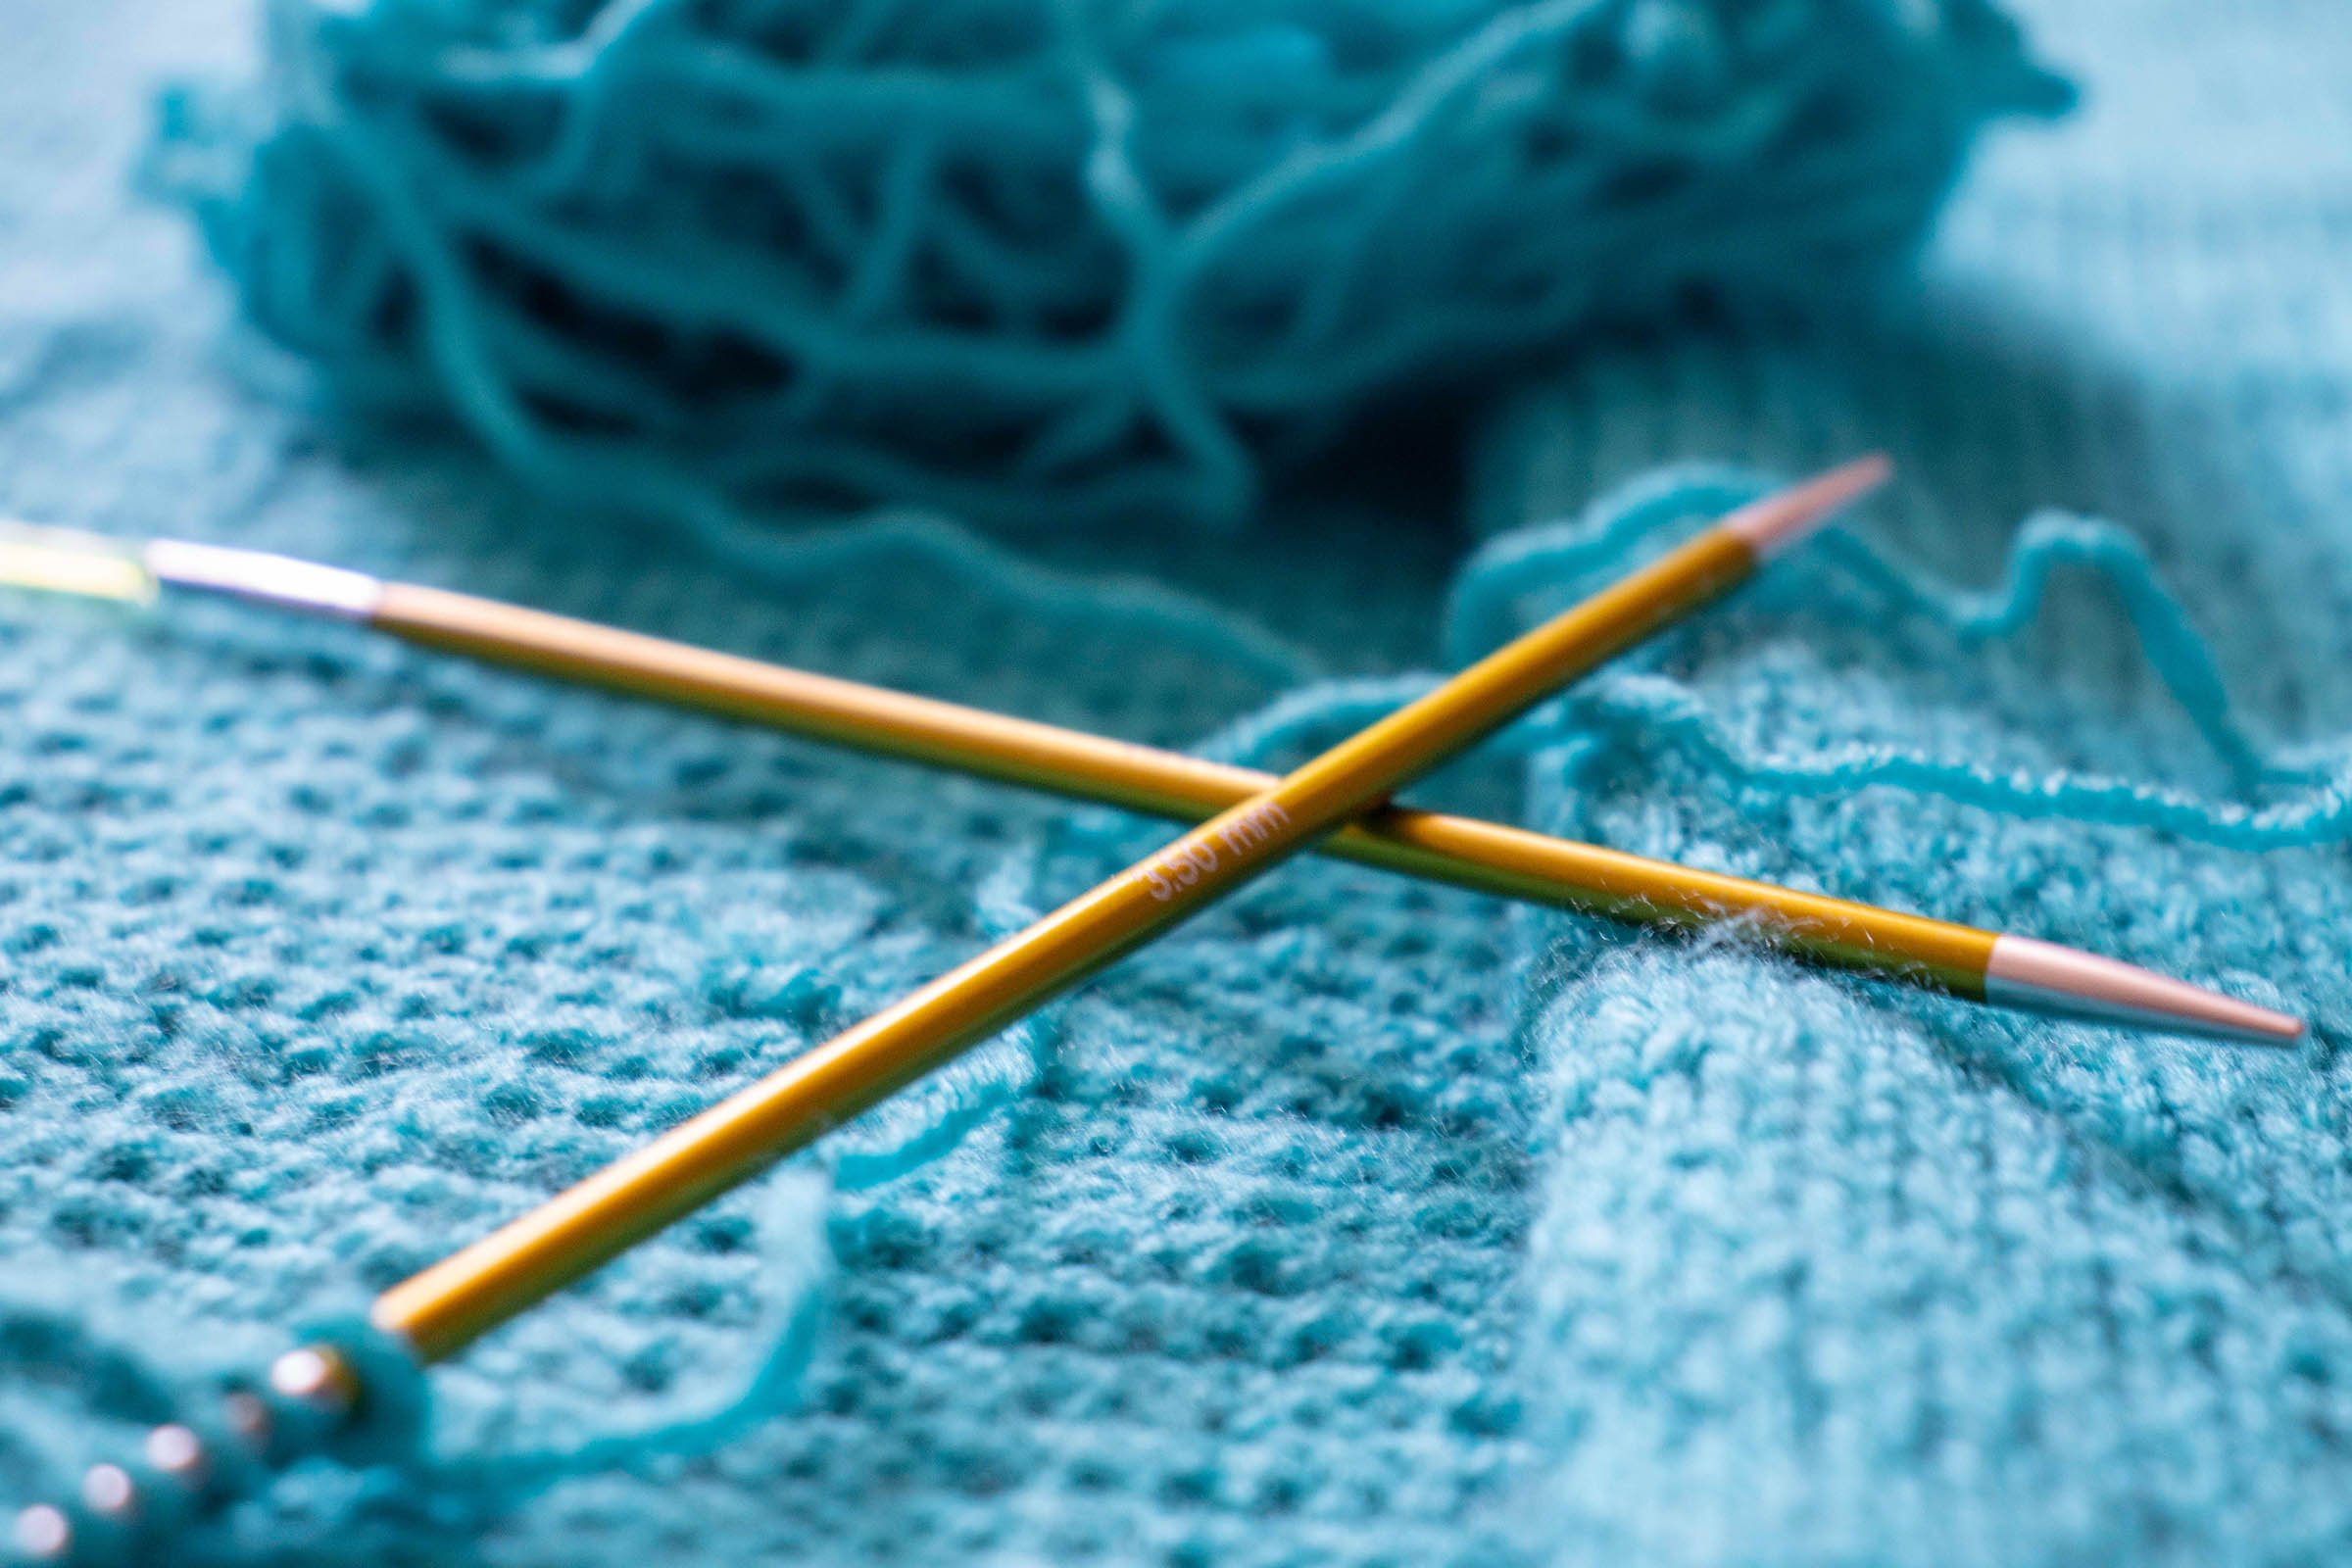 Holding the Yarn — My Secret Wish Knitting